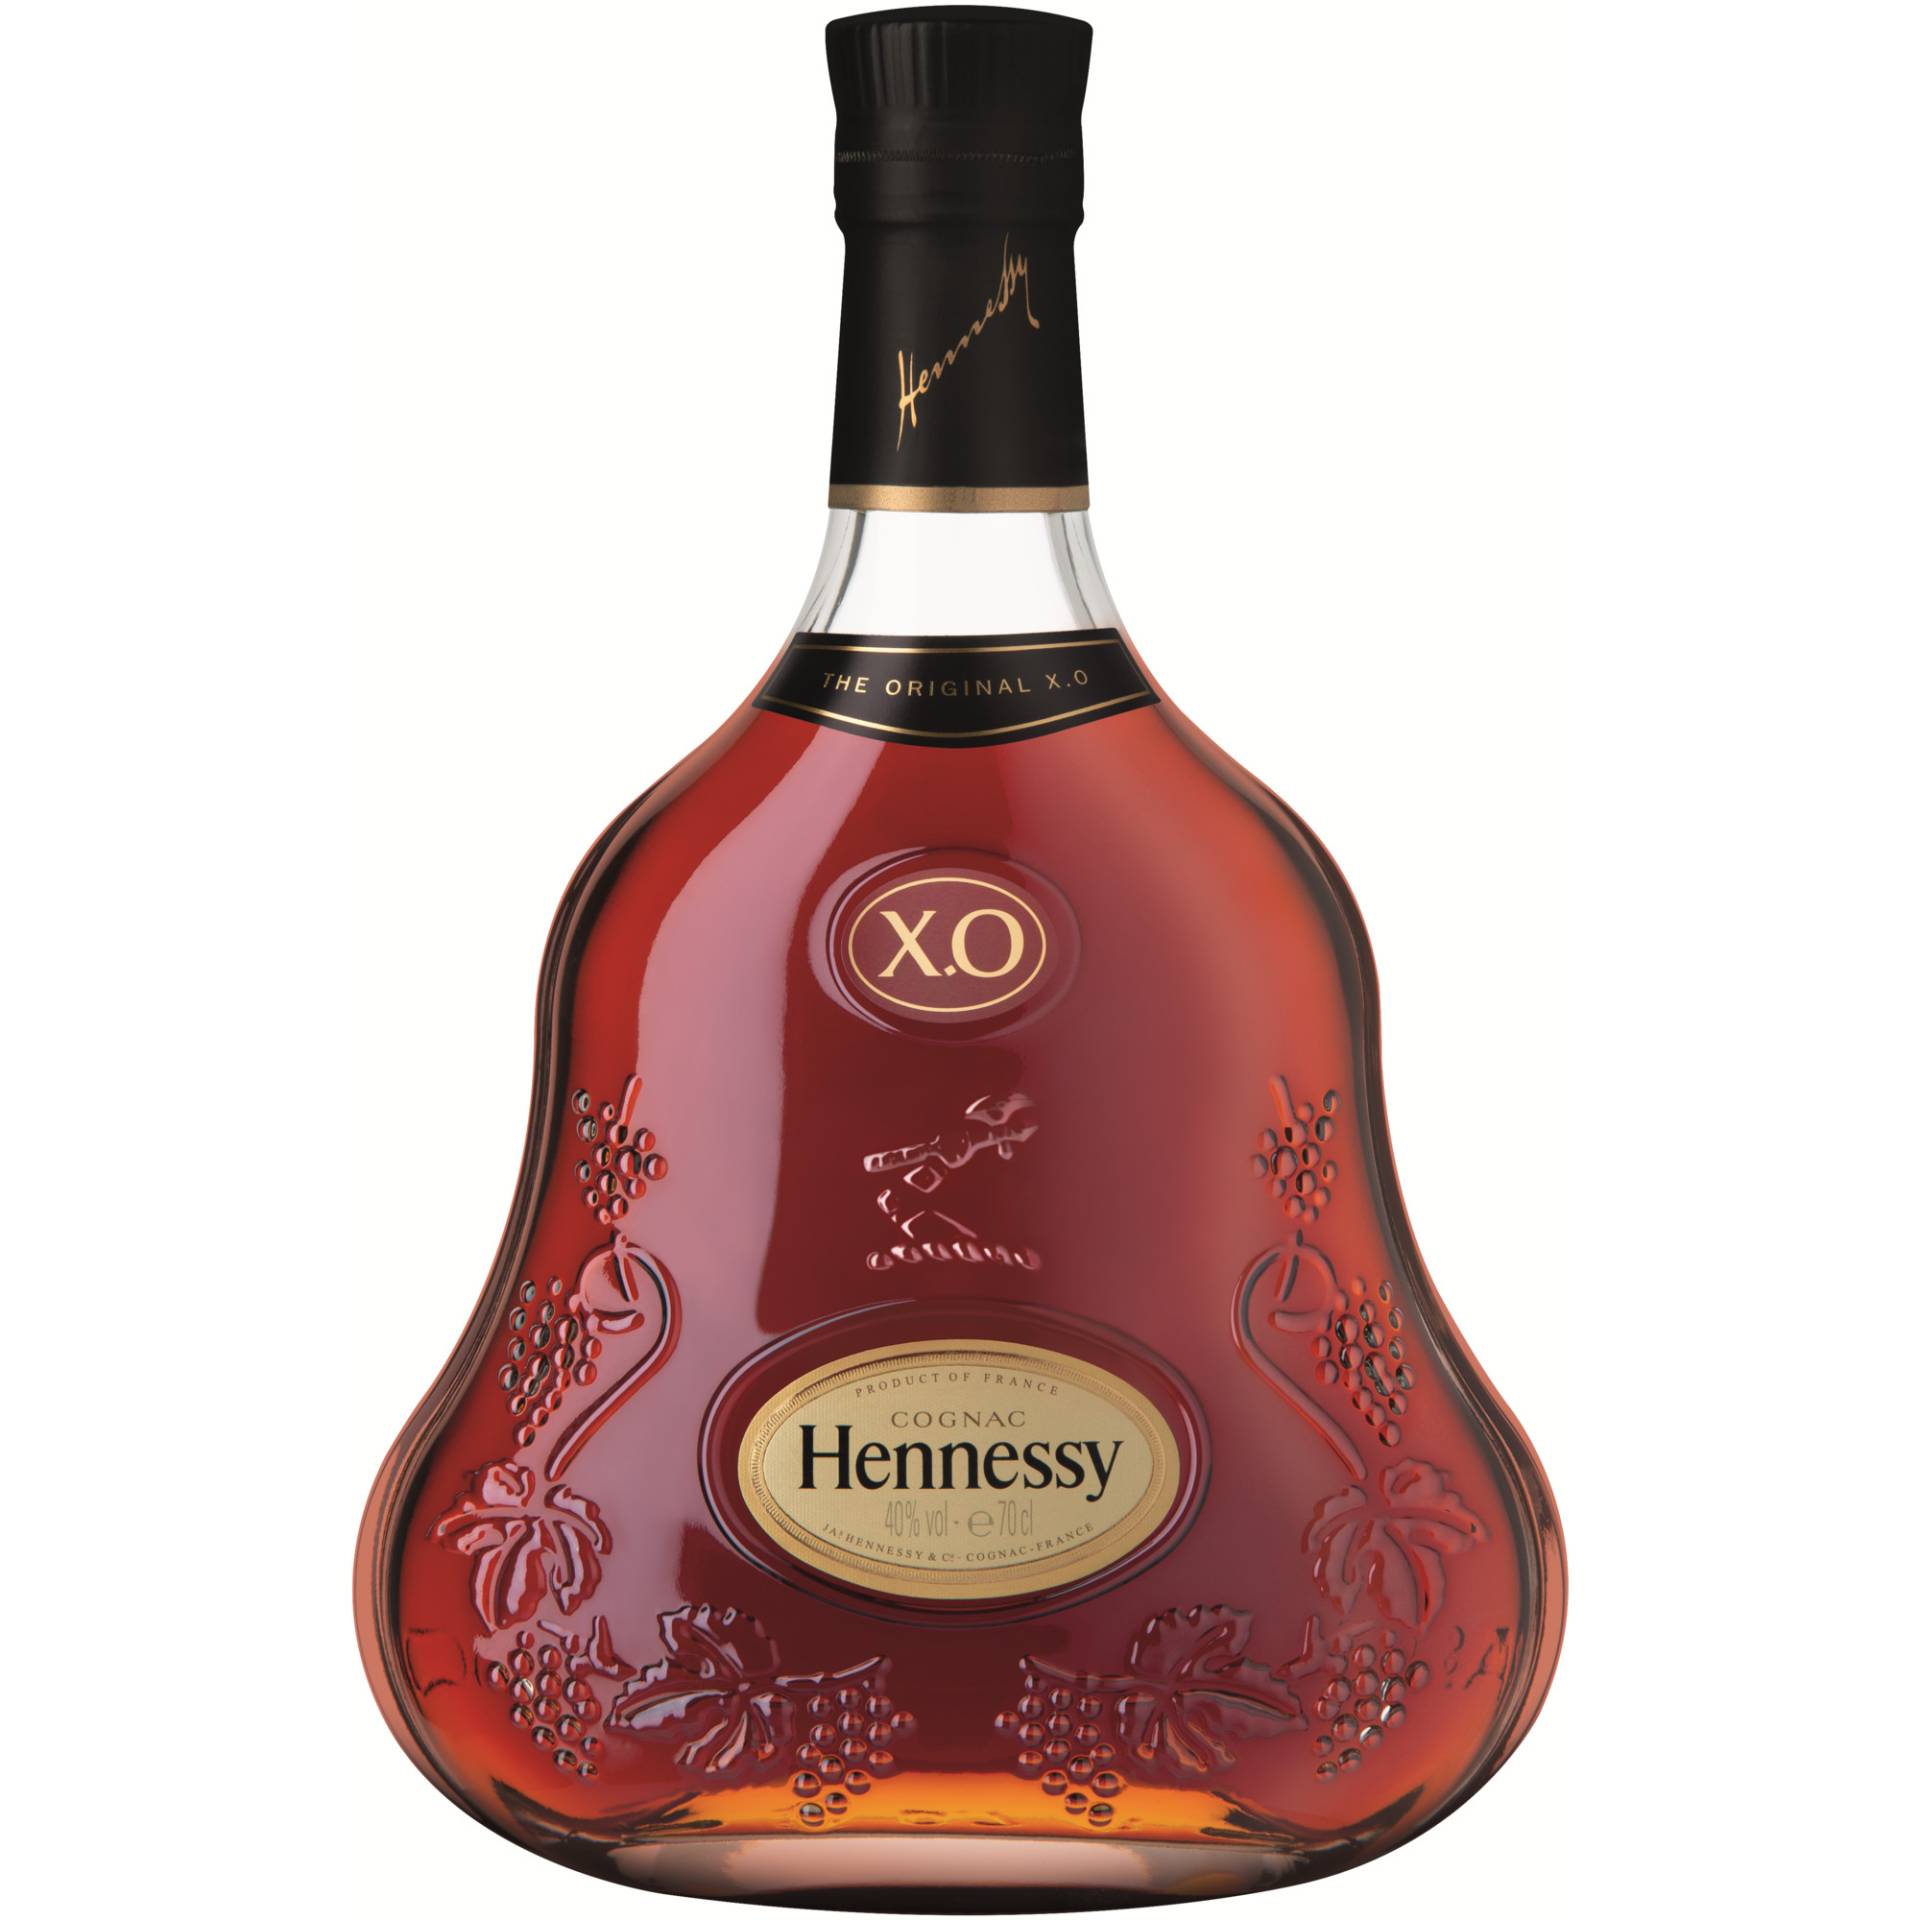 Cognac Hennessy XO, Cognac AOP, 0,7 L, 40% Vol., Geschenketui, Spirituosen von Hennessy Cognac, Cognac, France